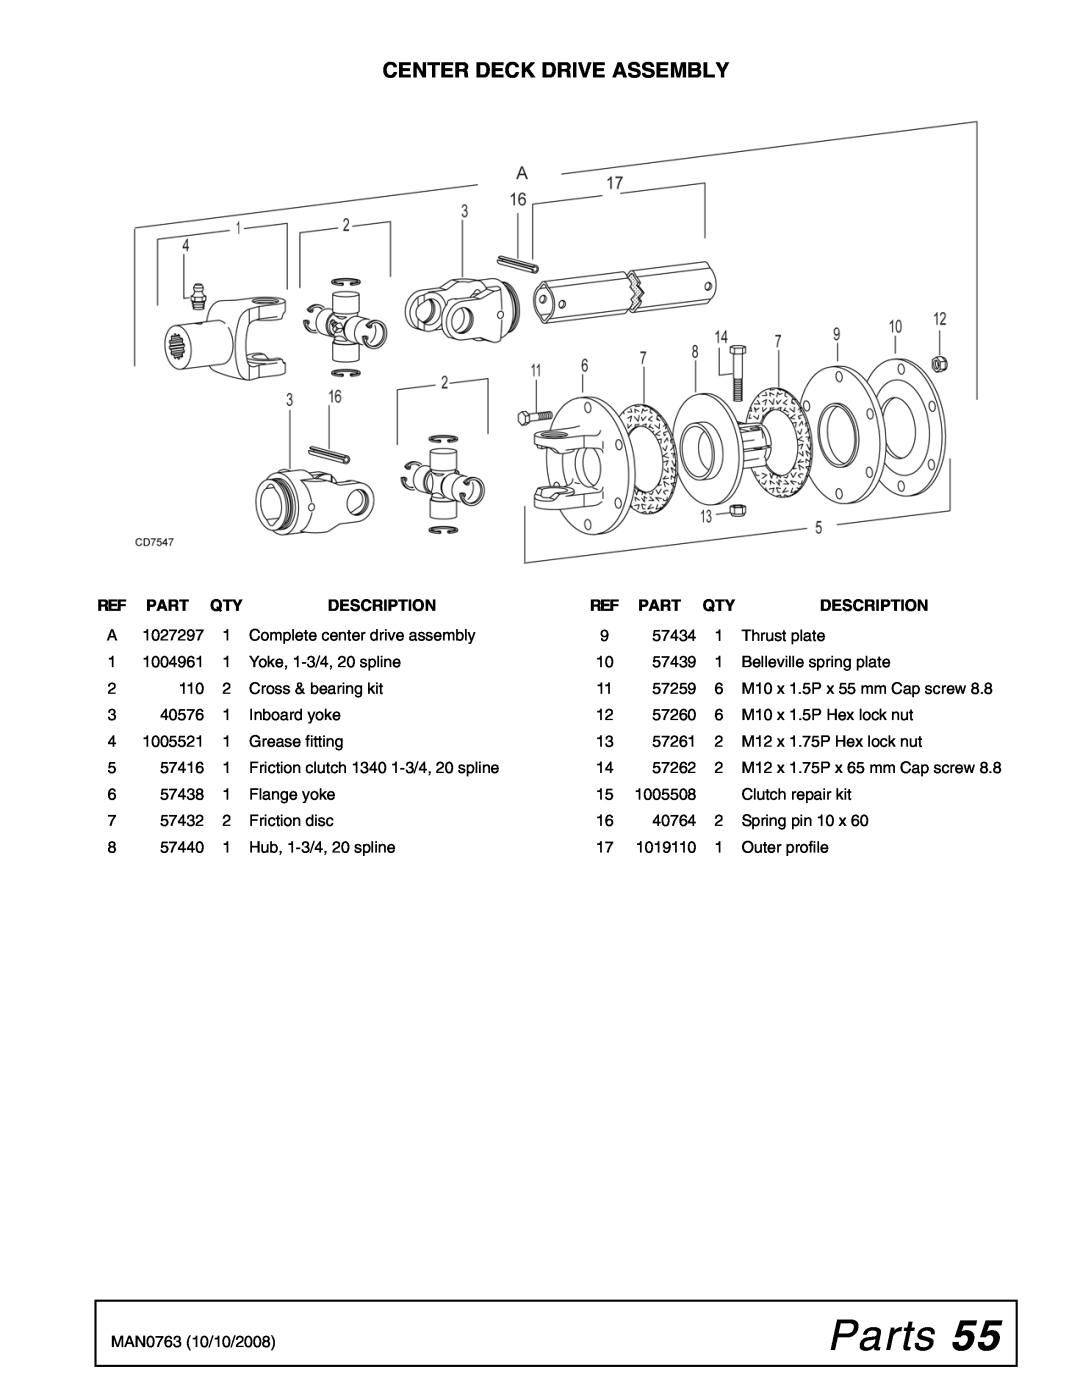 Woods Equipment BW240HDQ manual Parts, Center Deck Drive Assembly, Description 